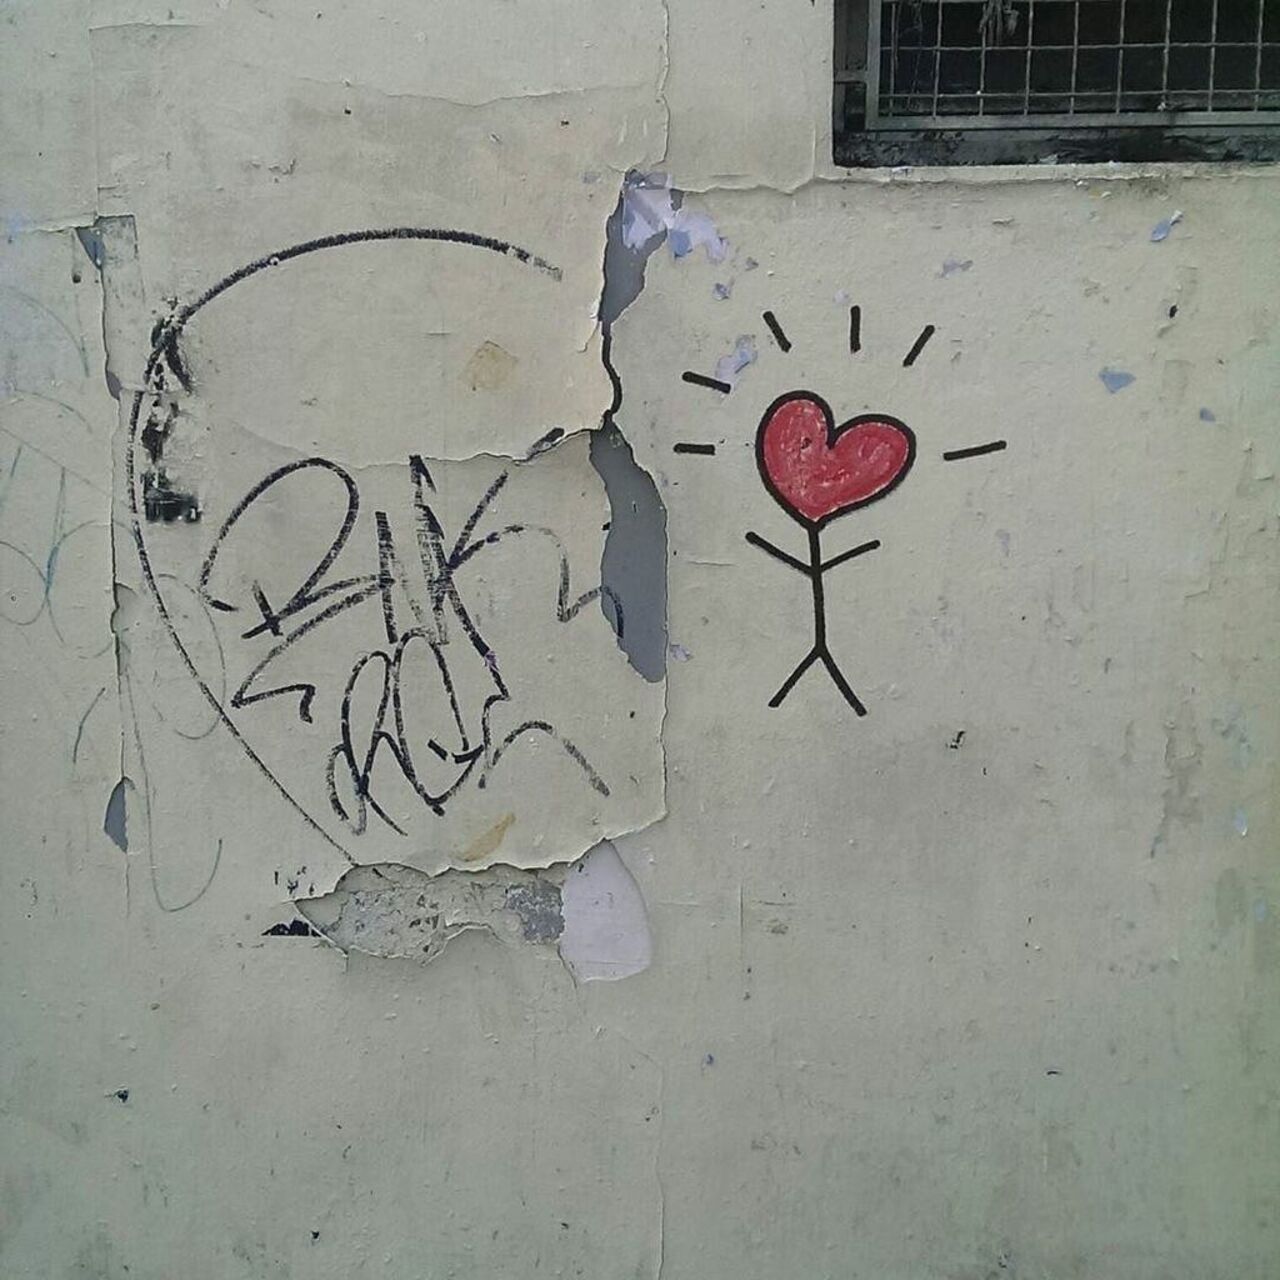 #streetart #streetarteverywhere #streetshot #graffitiart #graffiti #arturbain #urbanart  #mur #mural #wall #wallart… https://t.co/KrVBEJXwbQ